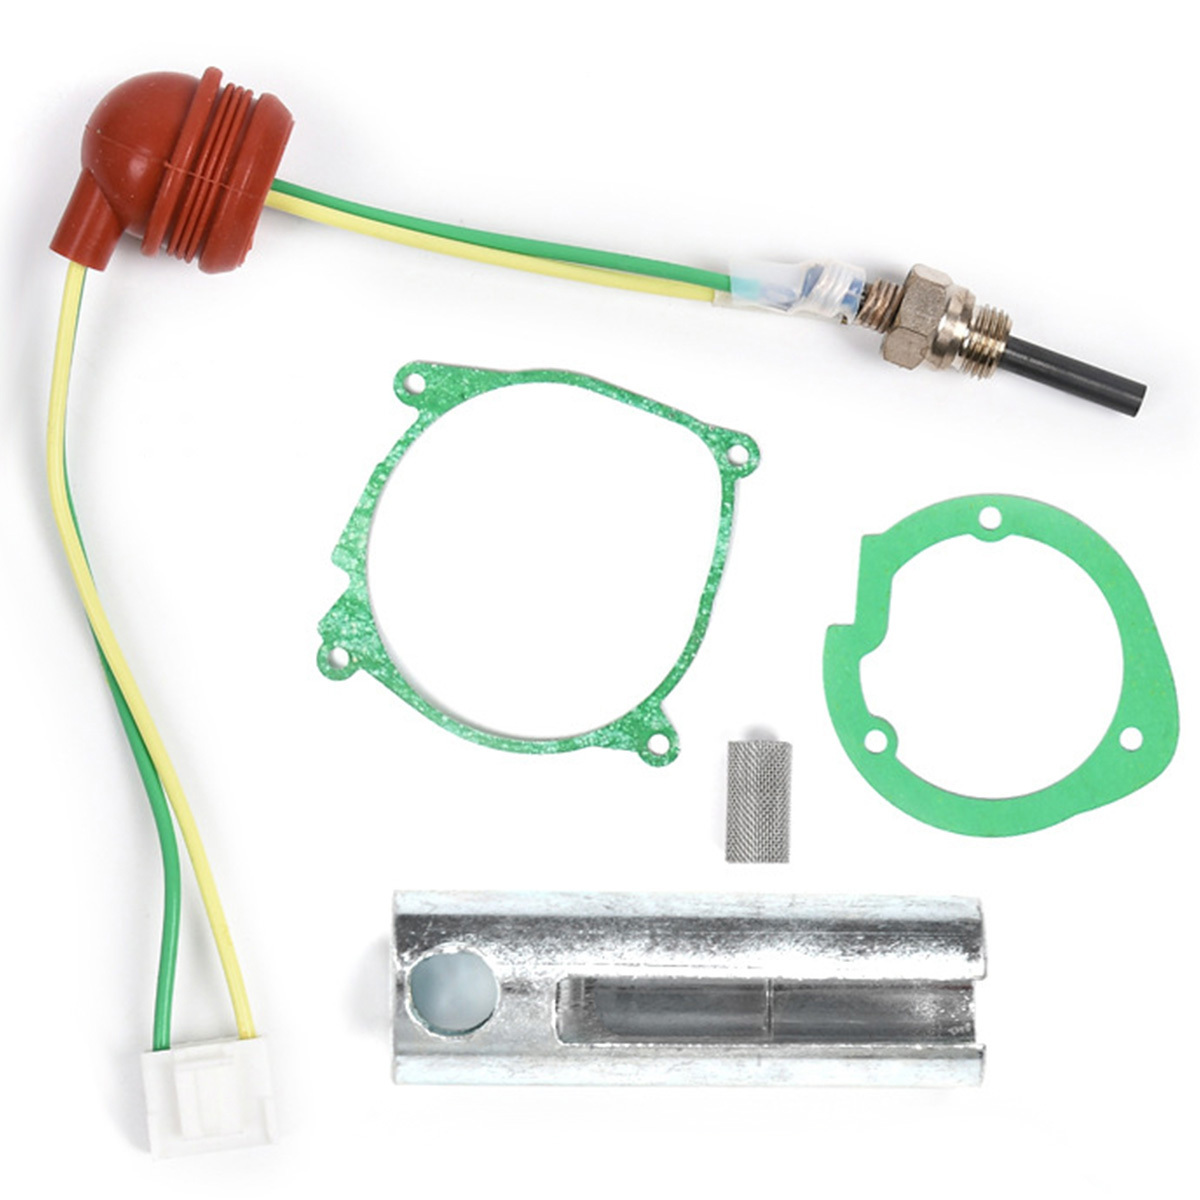  Glow Plug Repair Kit, D2 Parking Heater Maintenance